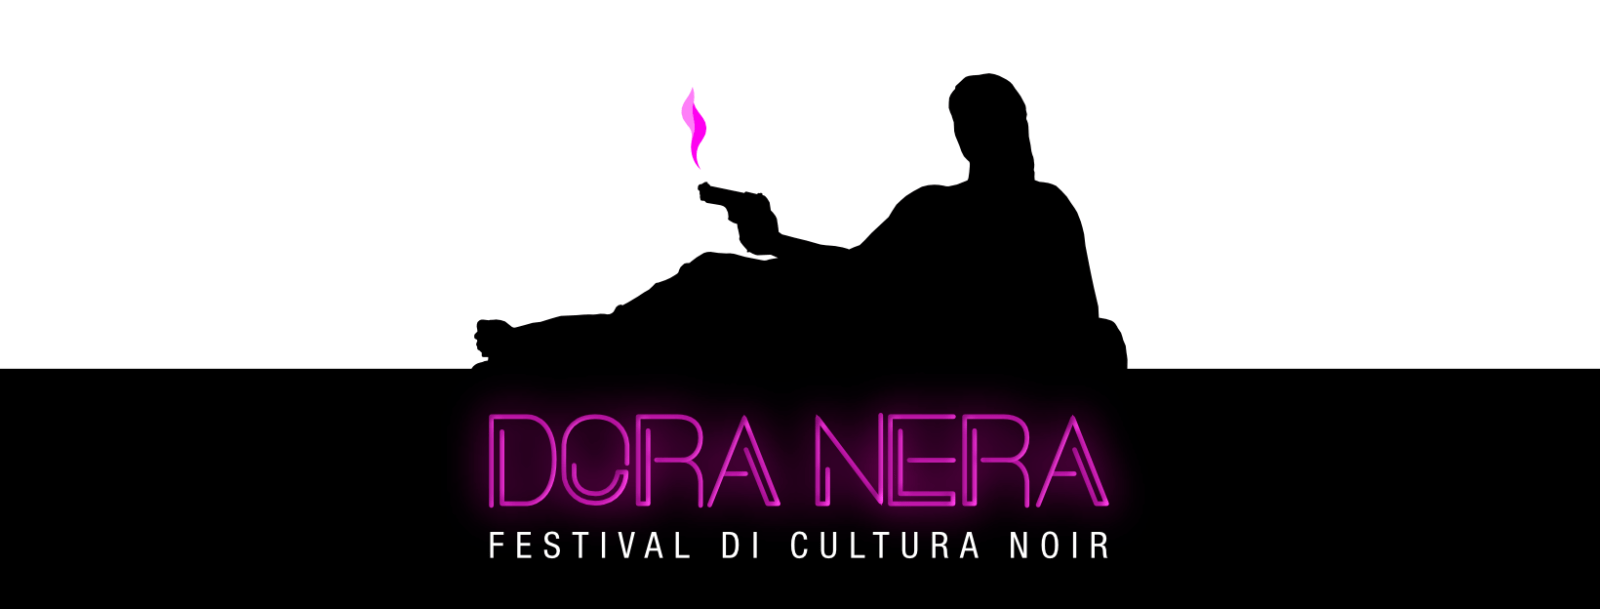 Dora Nera - Festival di cultura noir a Torino